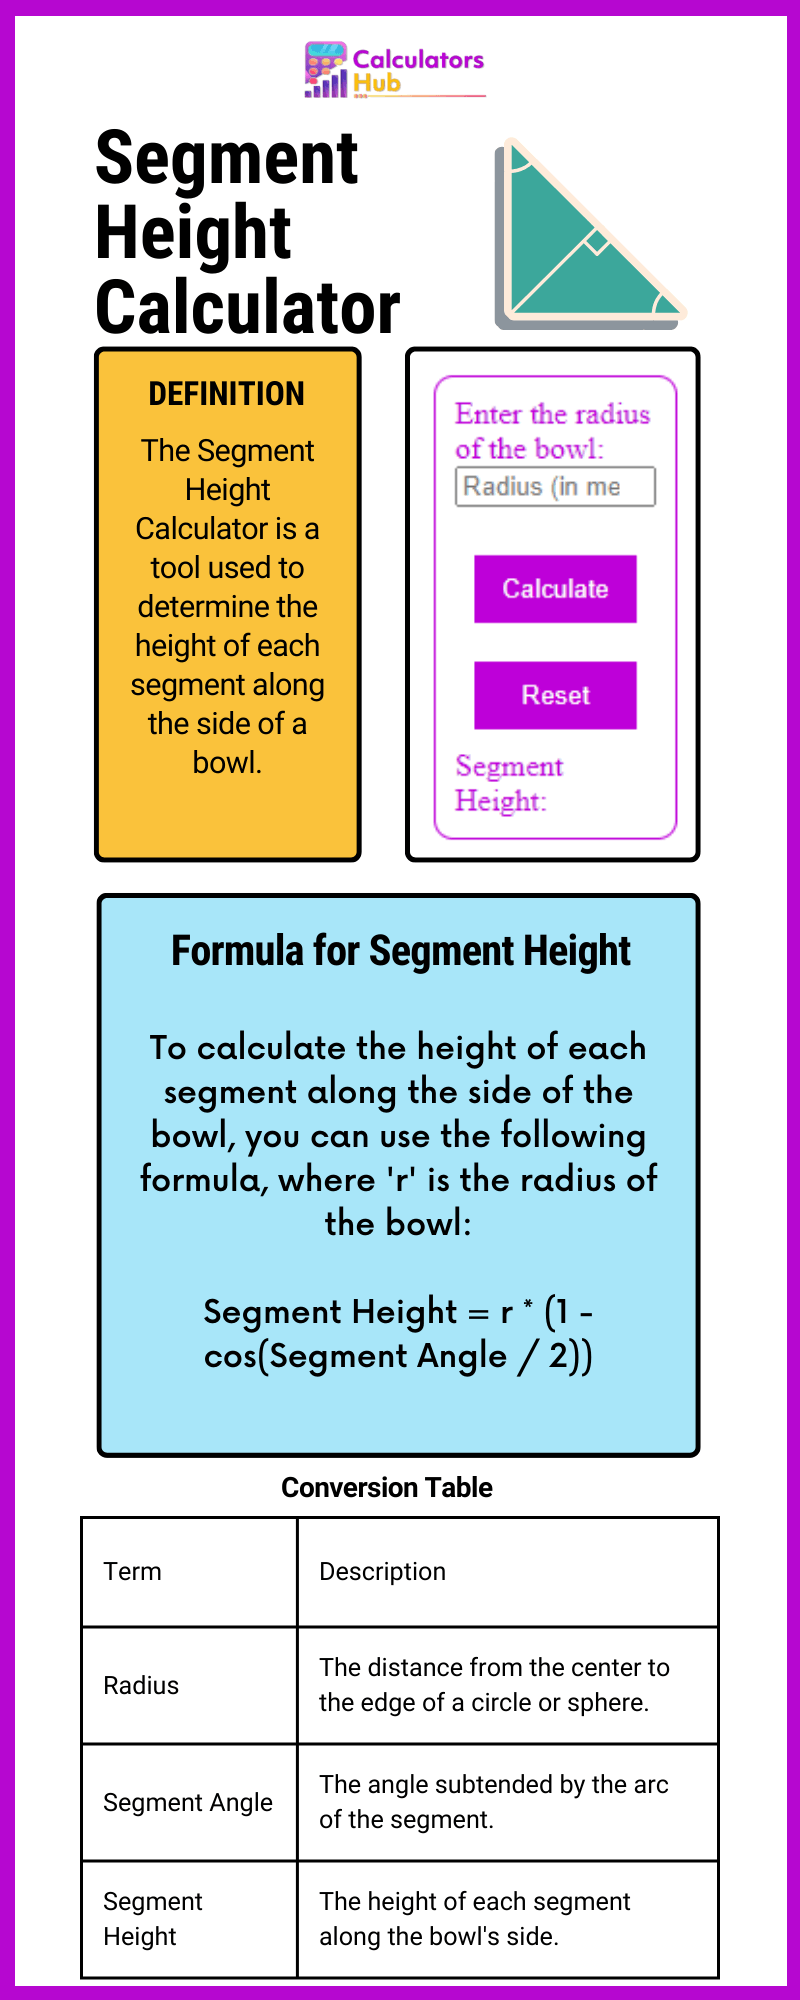 Segment Height Calculator